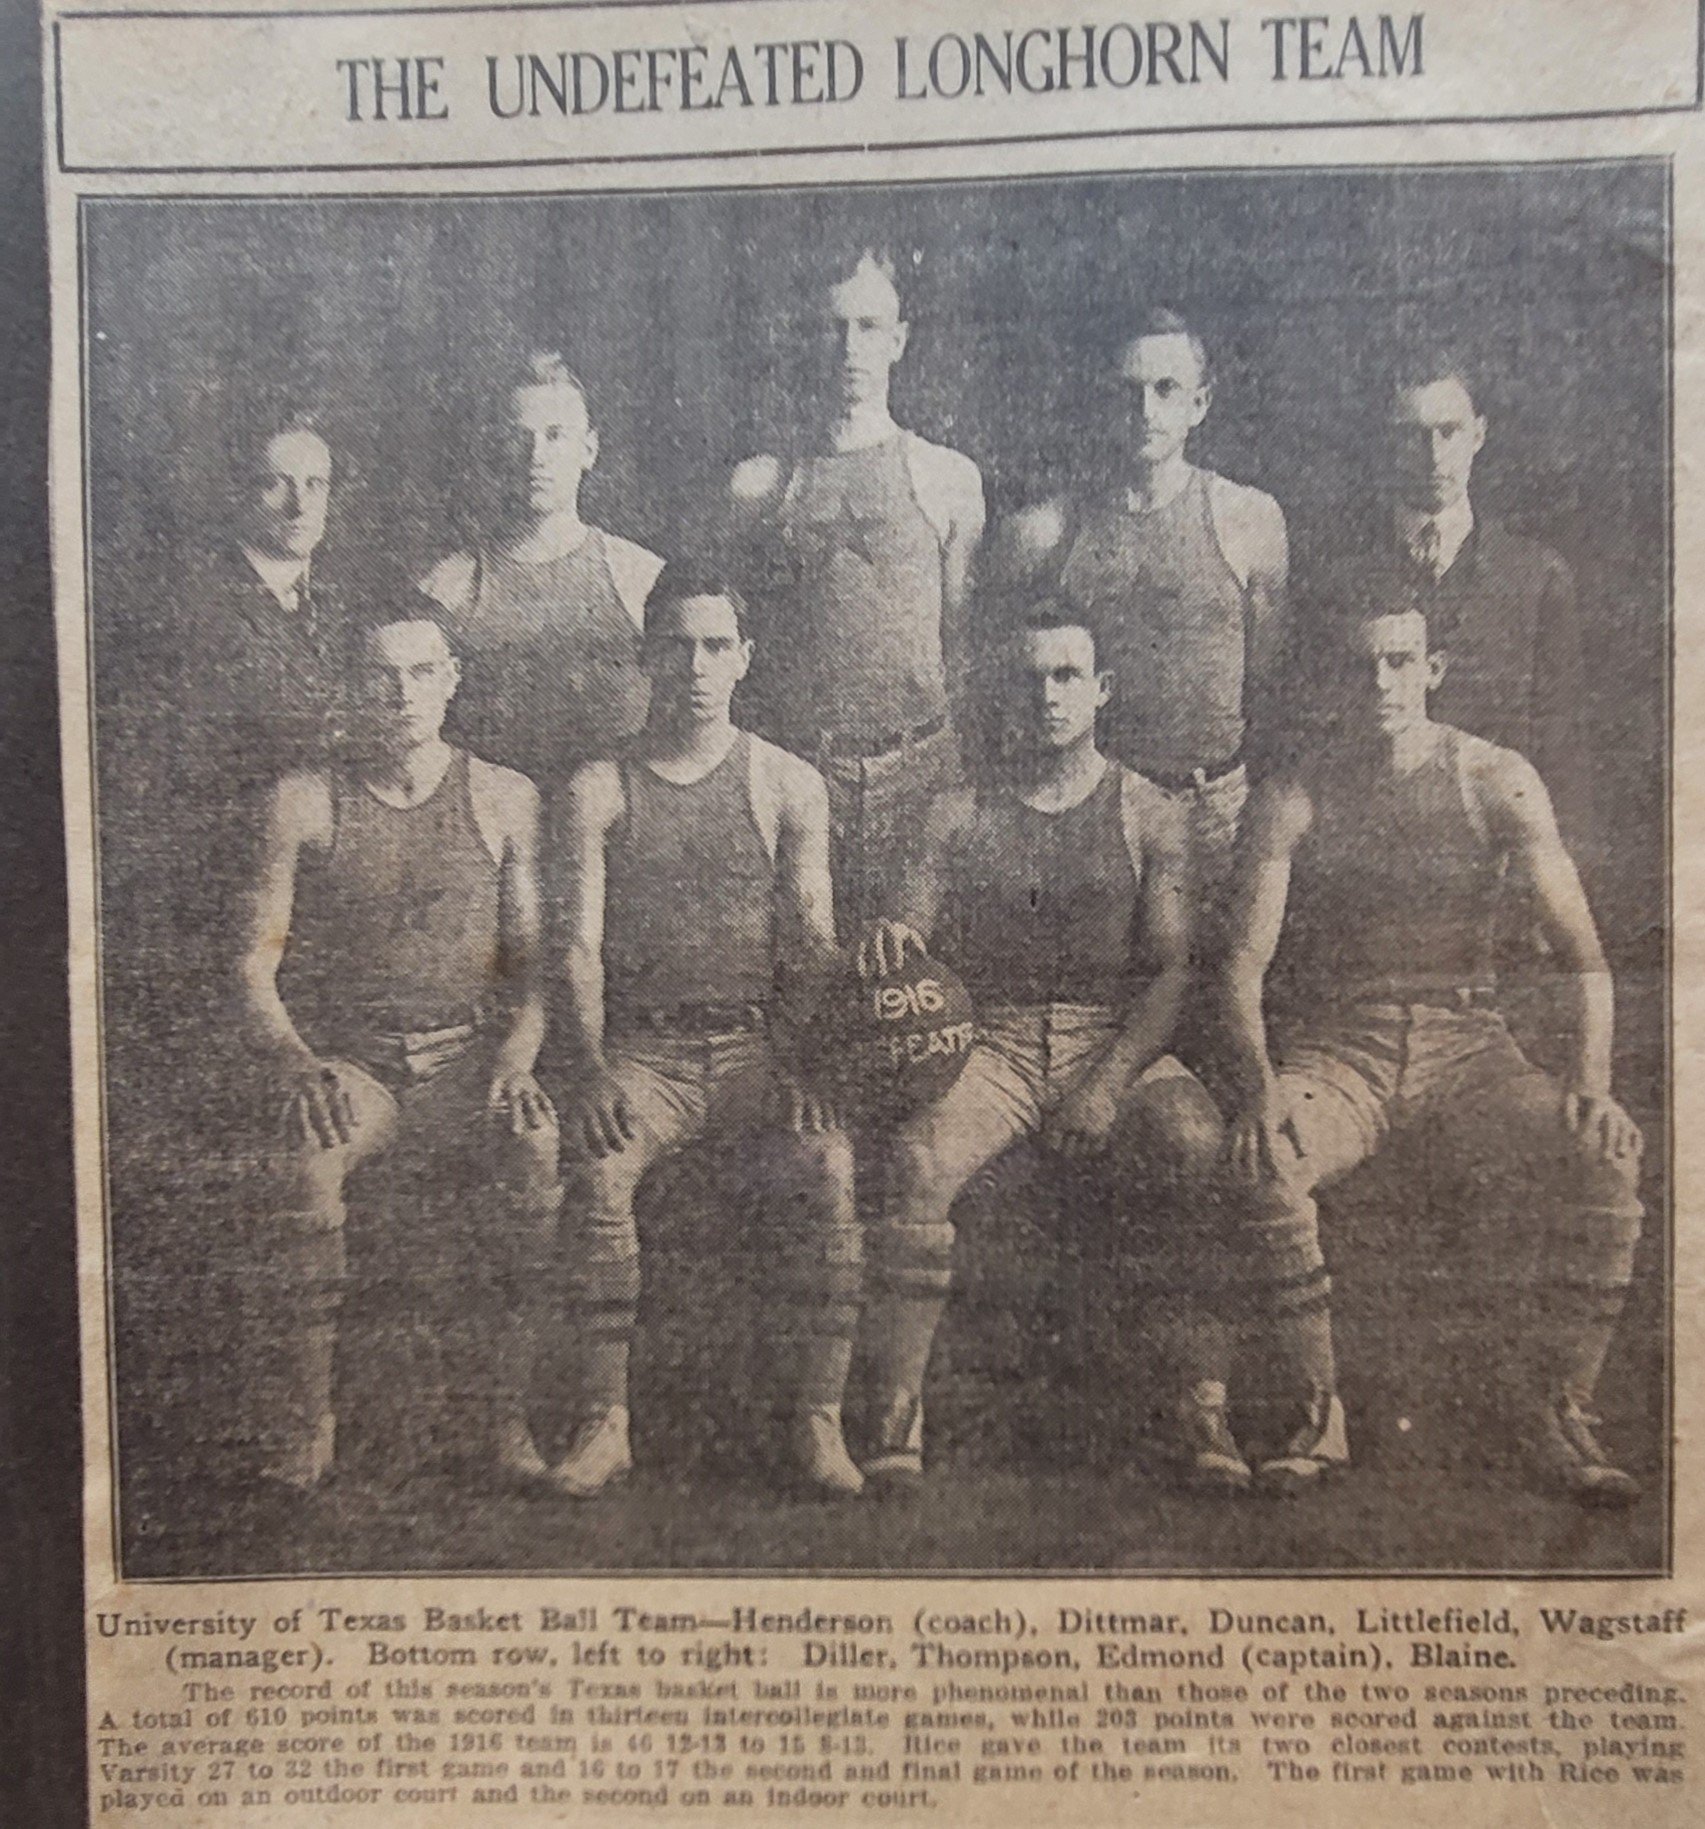  1916 basketball  top- Henderson, Duncan, Littlefiedl, WagStaff (manager) bottom Diller, Thompson, Edmond (captain) and Blaine.jpg 